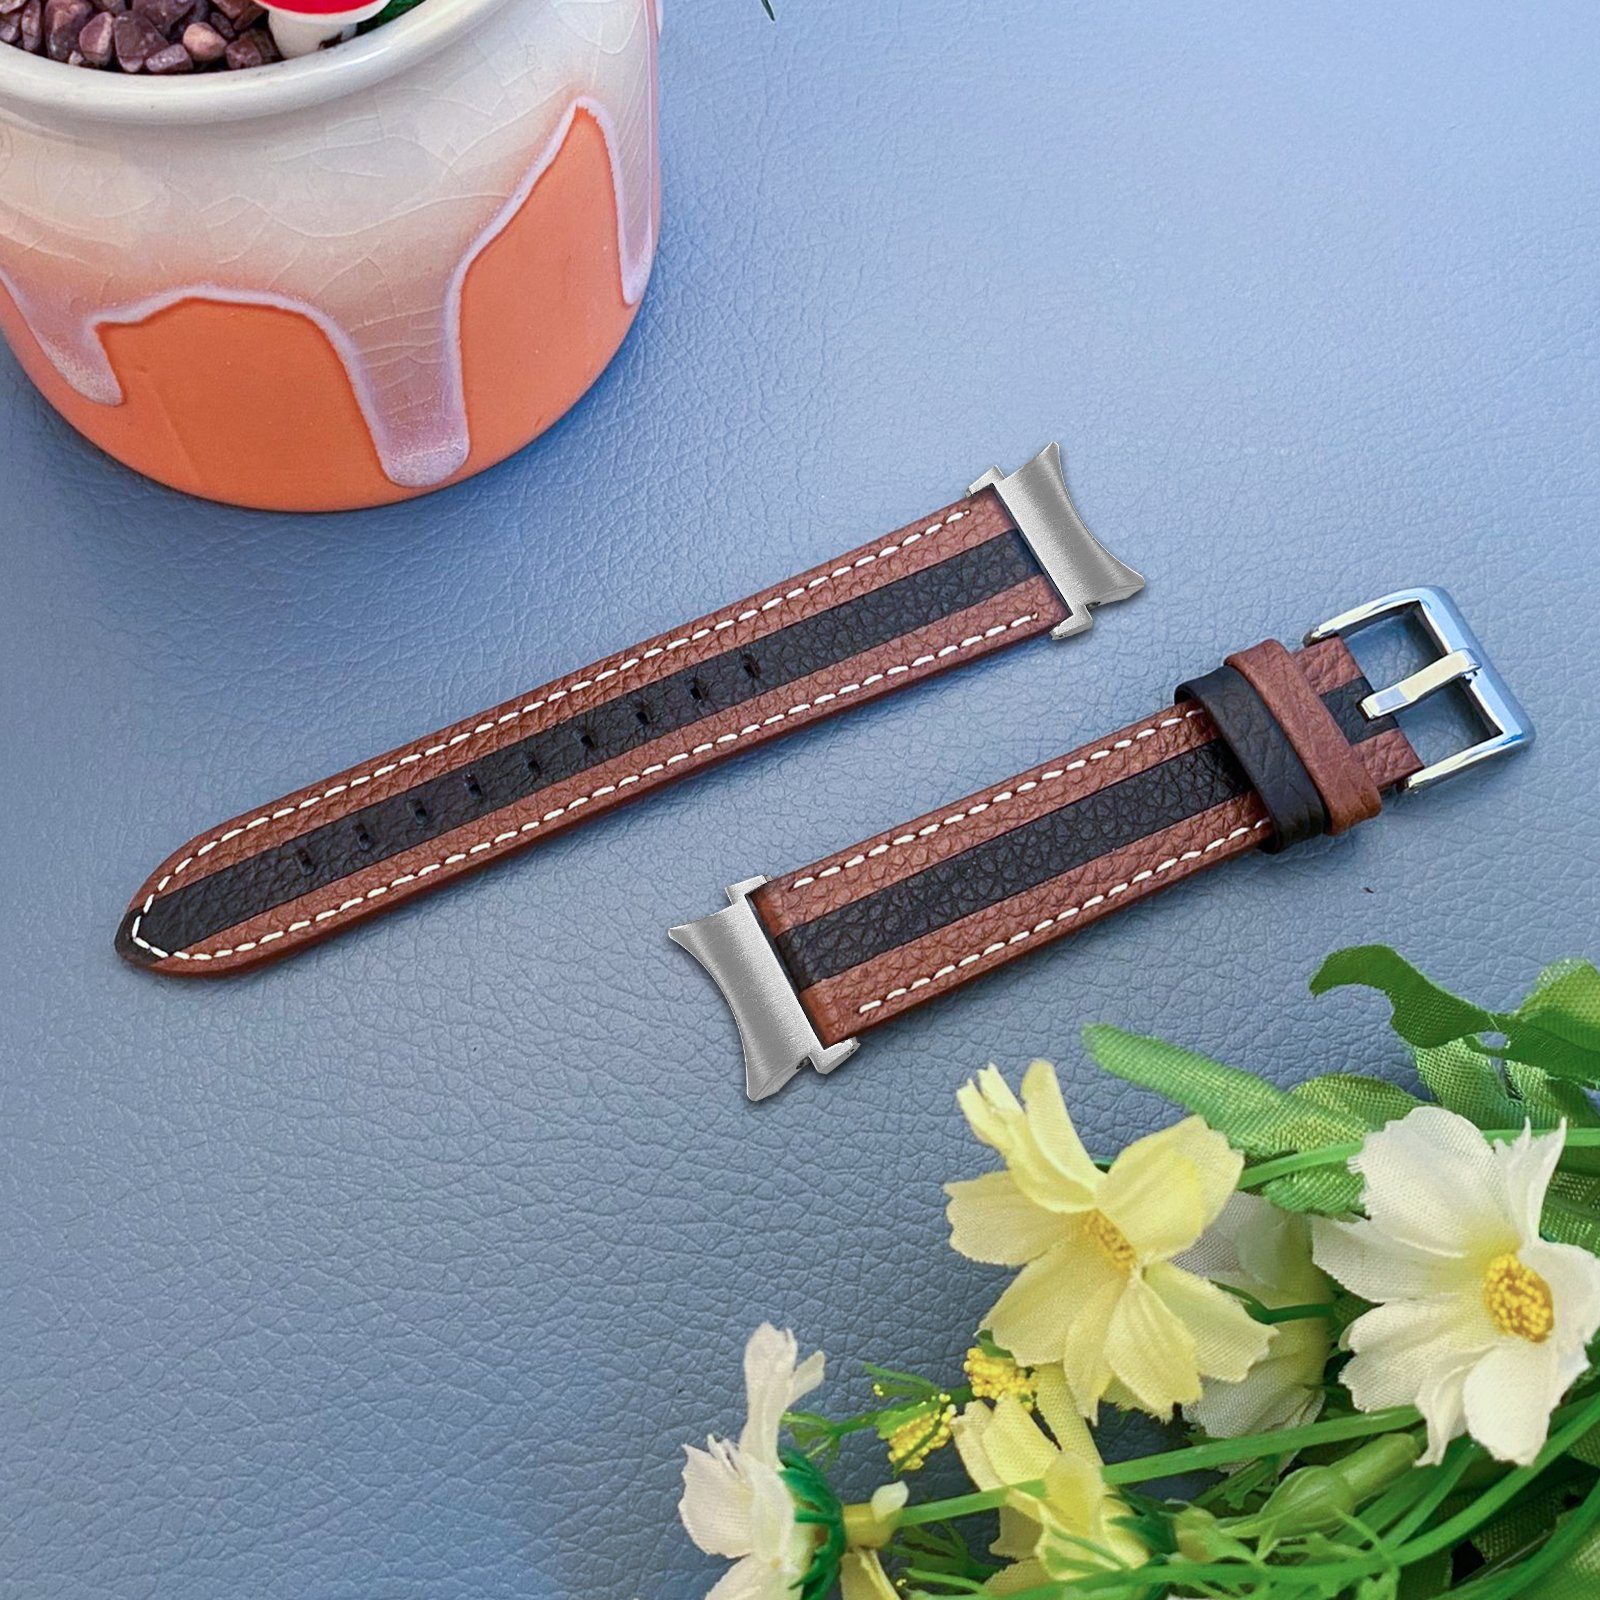 für Samsung schwarz 4 und Armband Kompatible Armband Smartwatch-Armband 20mm 20mm Braun Watch Galaxy ELEKIN Classic